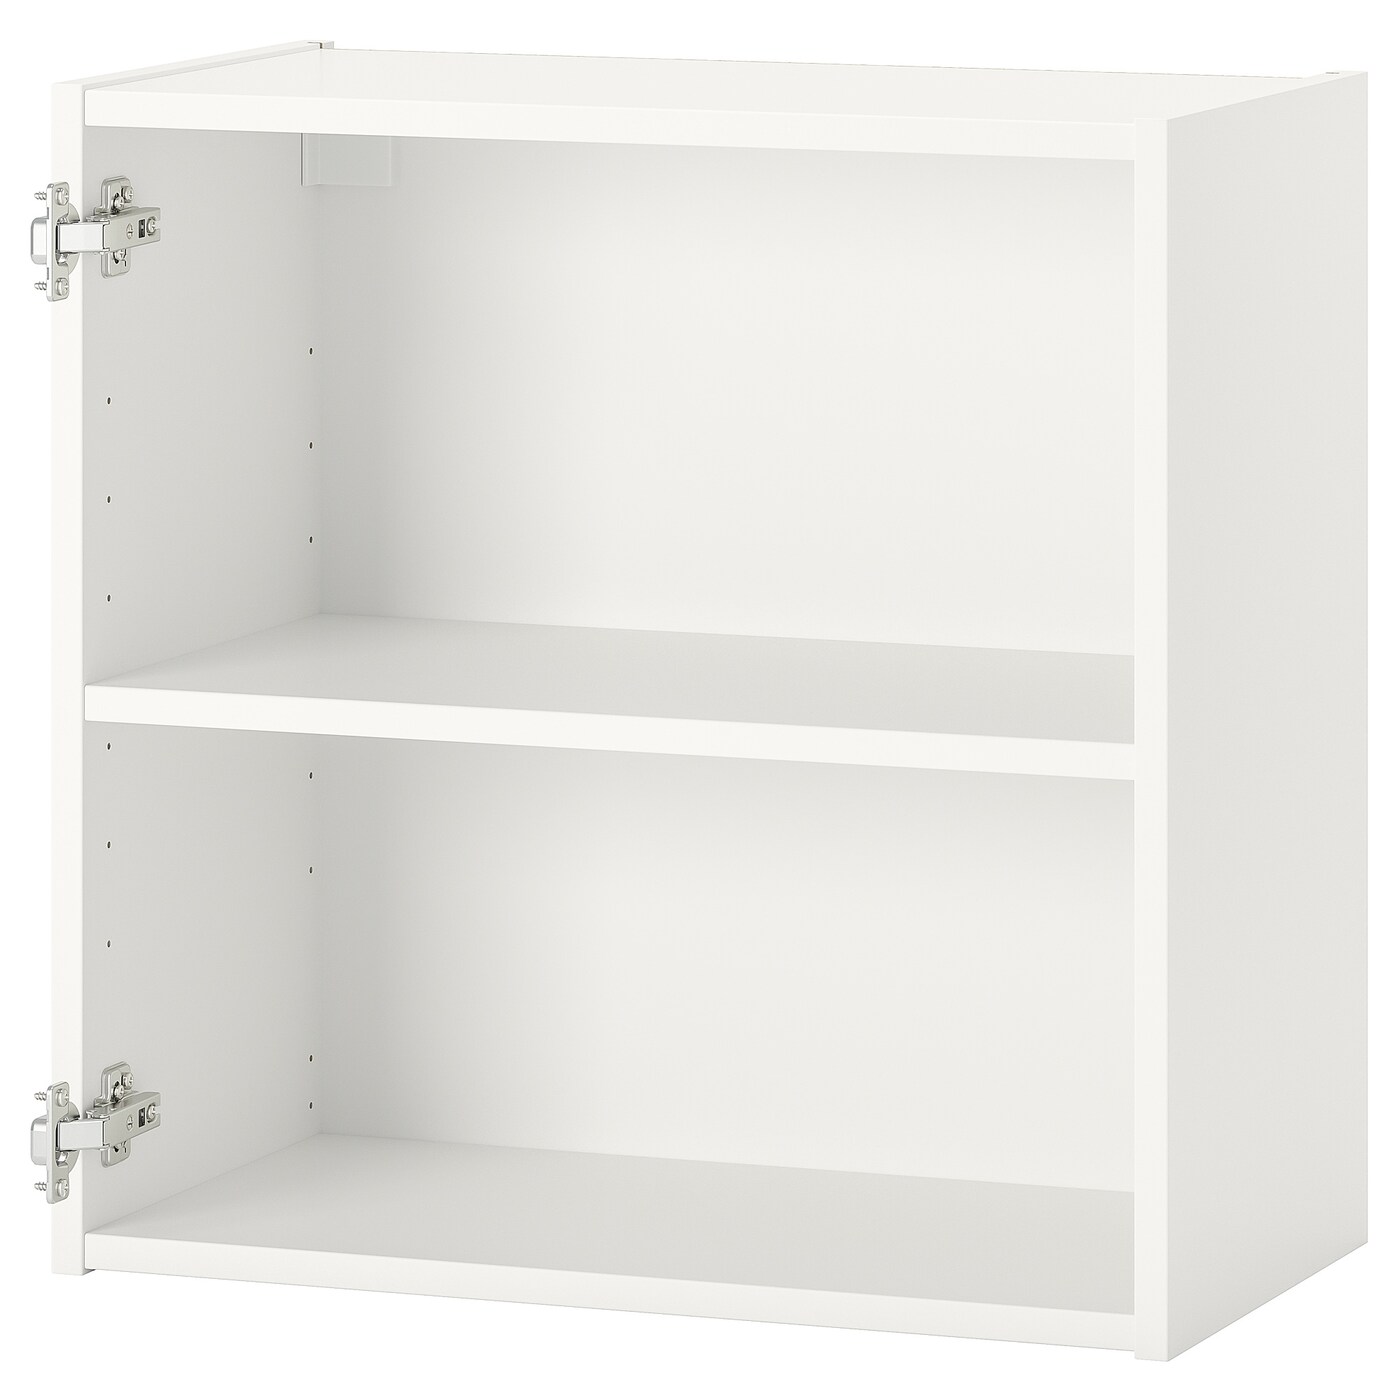 Каркас кухонного навесного шкафа - IKEA METOD/МЕТОД ИКЕА,  60х30х60 см, белый